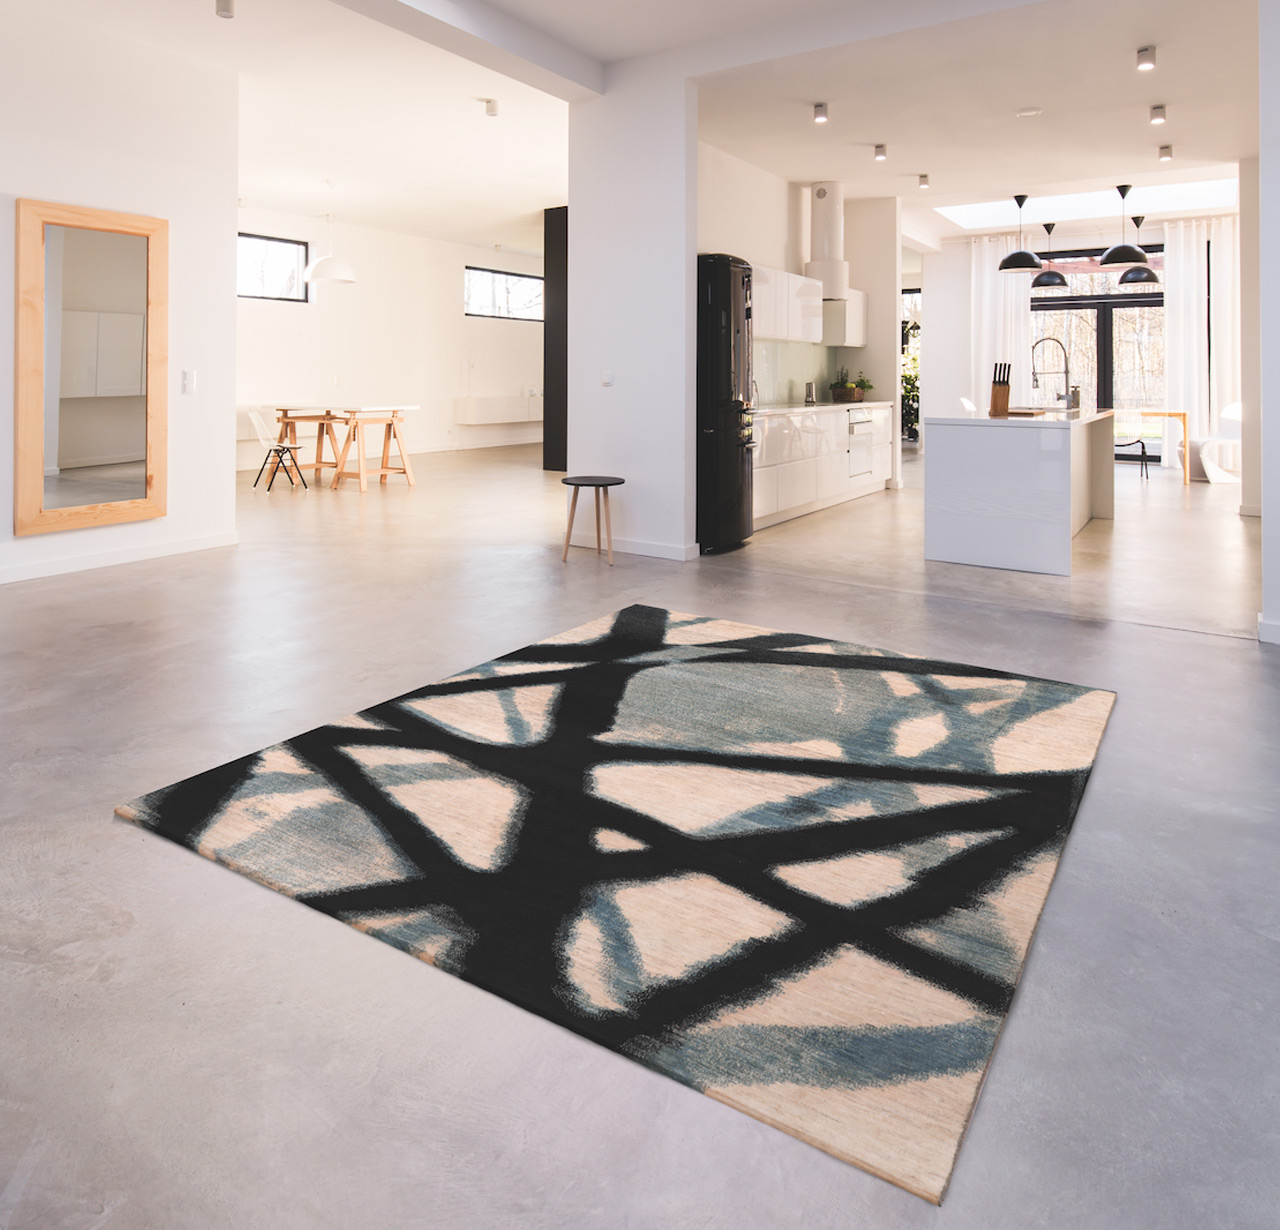 Beautiful rug in an open studio